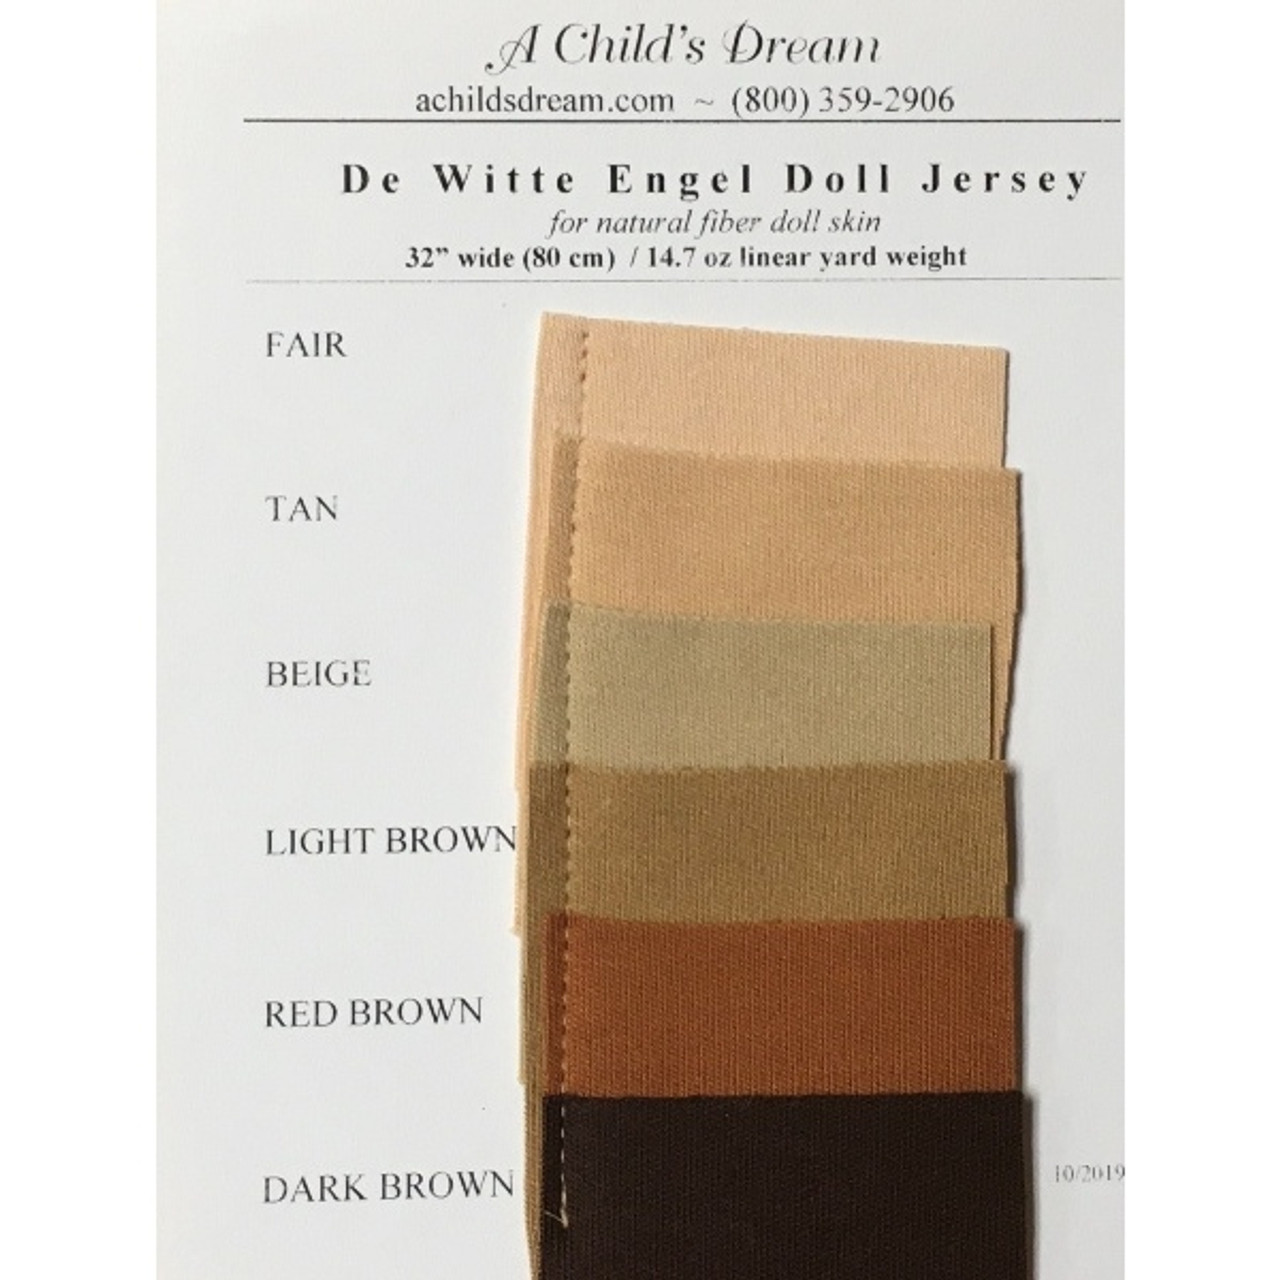 De Witte Engel Doll Jersey  Waldorf Doll Skin Fabric - A Child's Dream